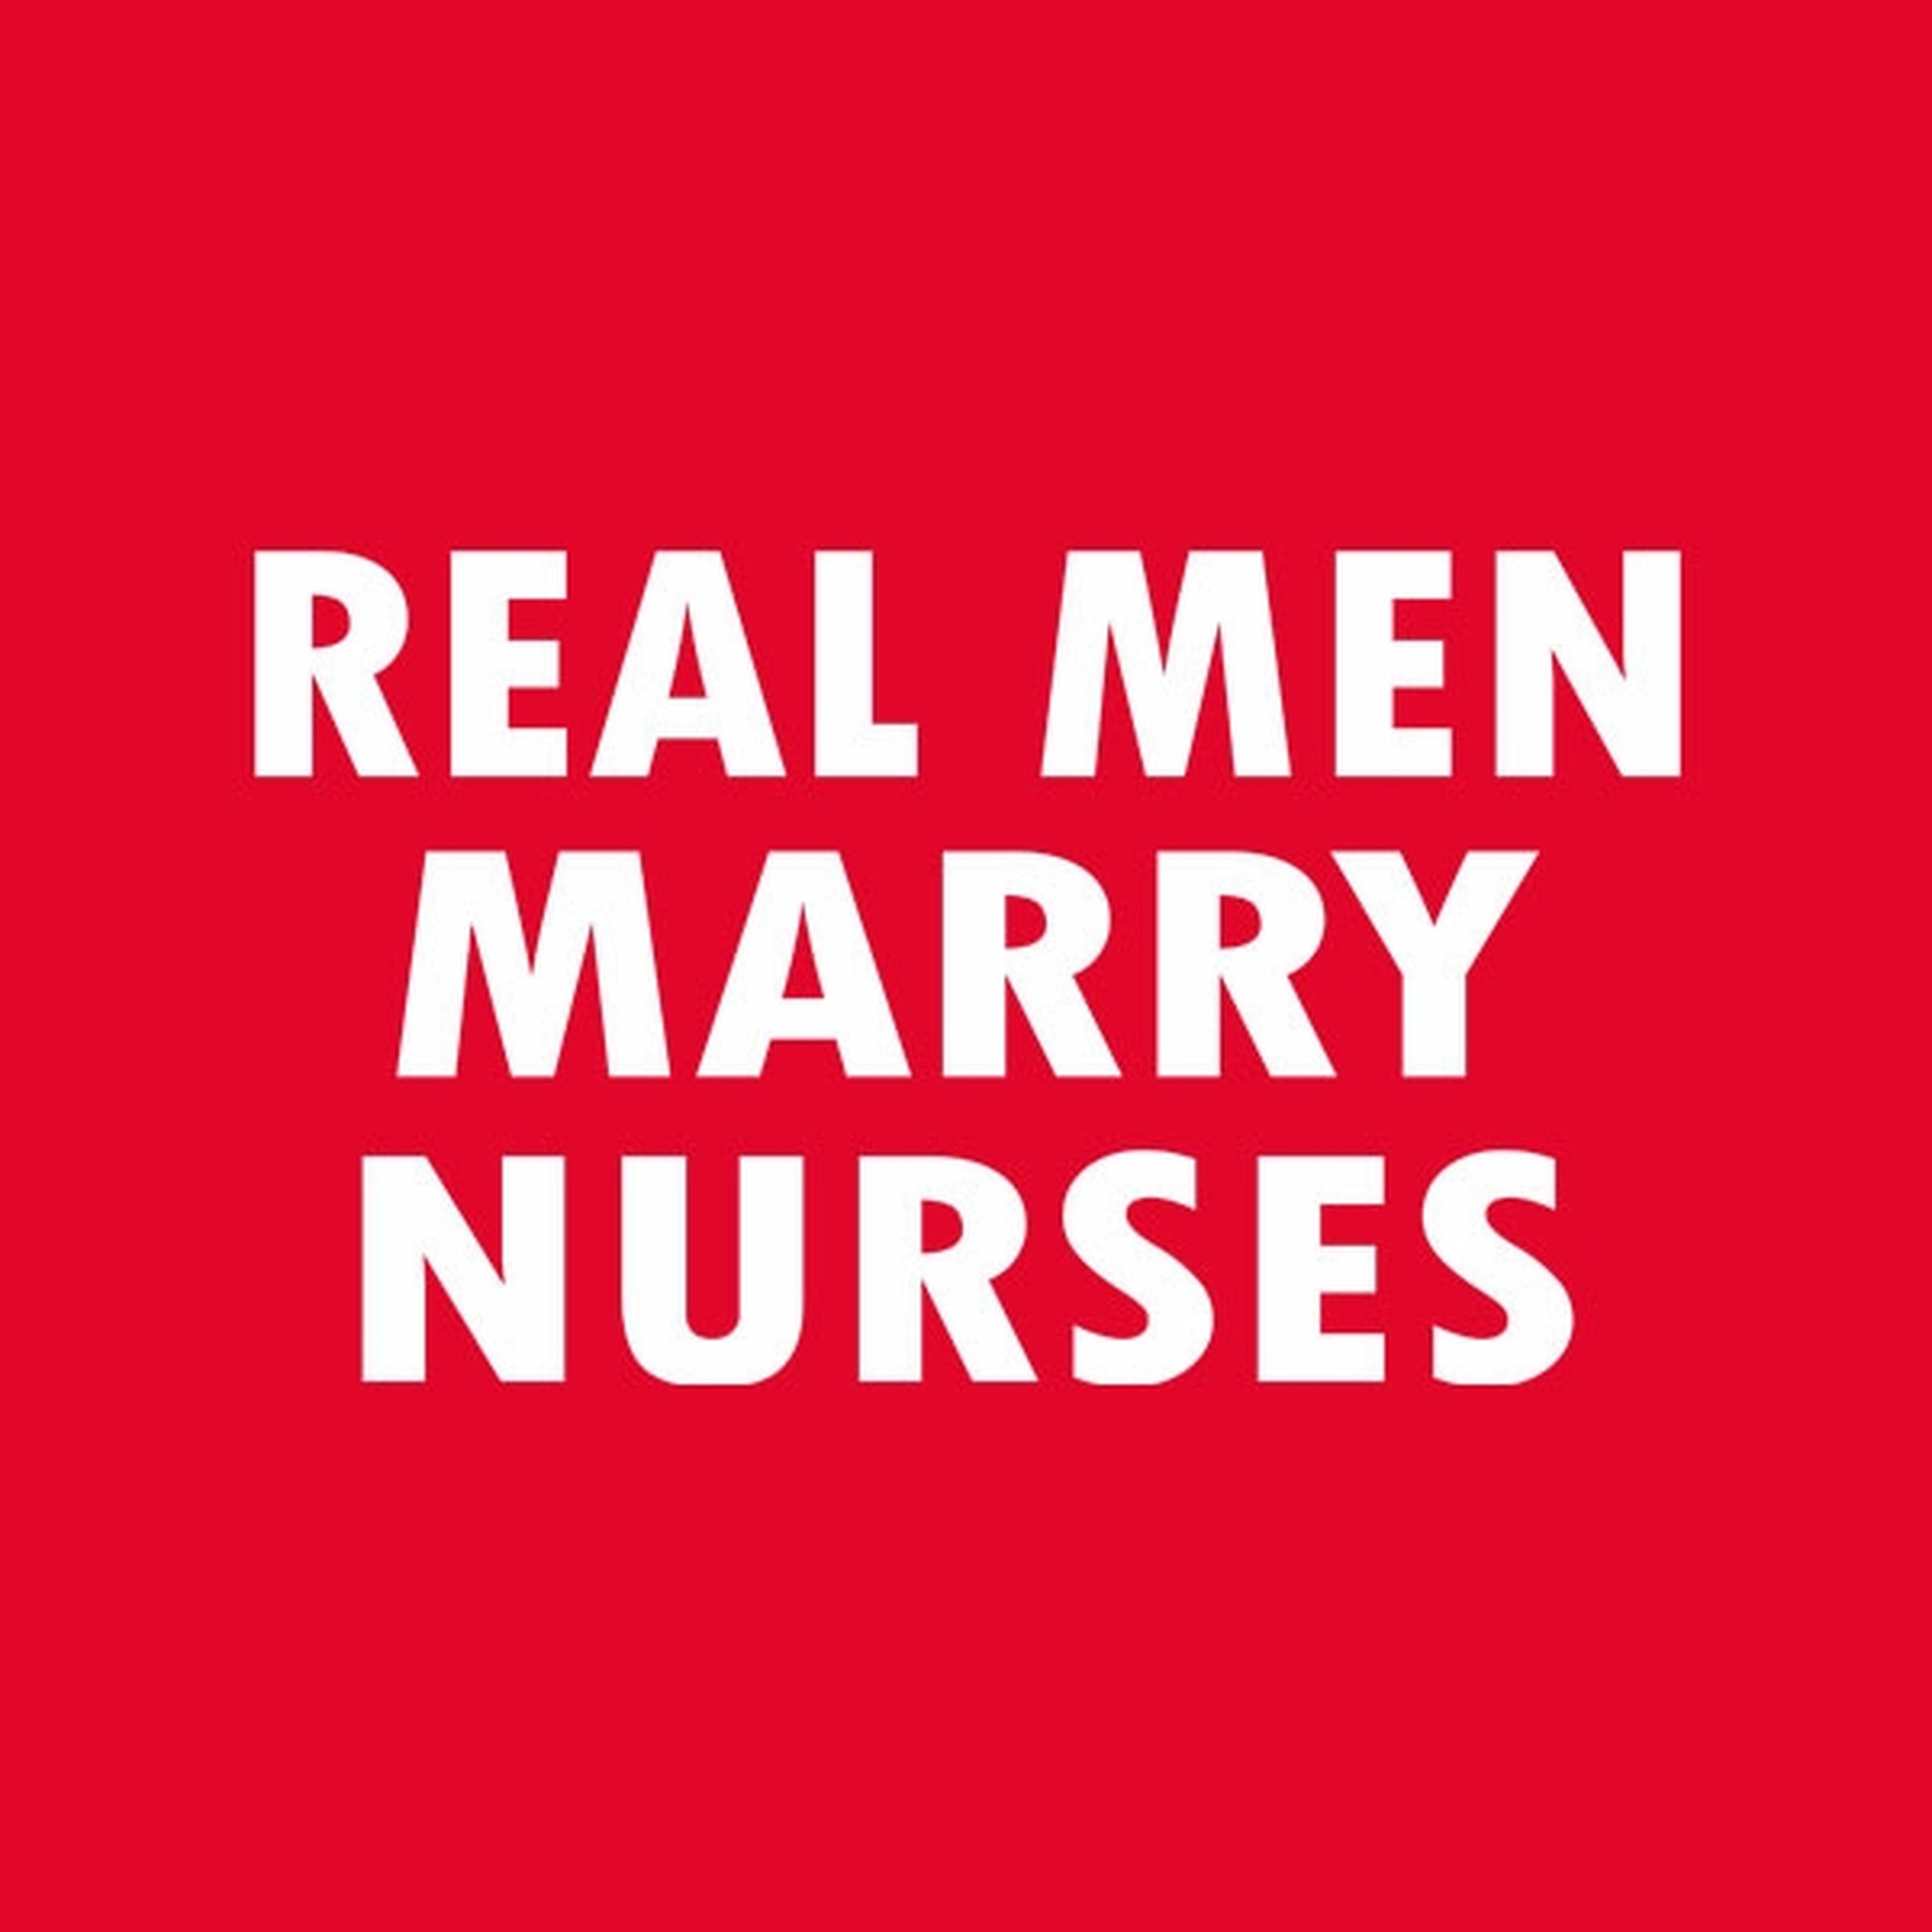 Real men marry nurses - T-shirt